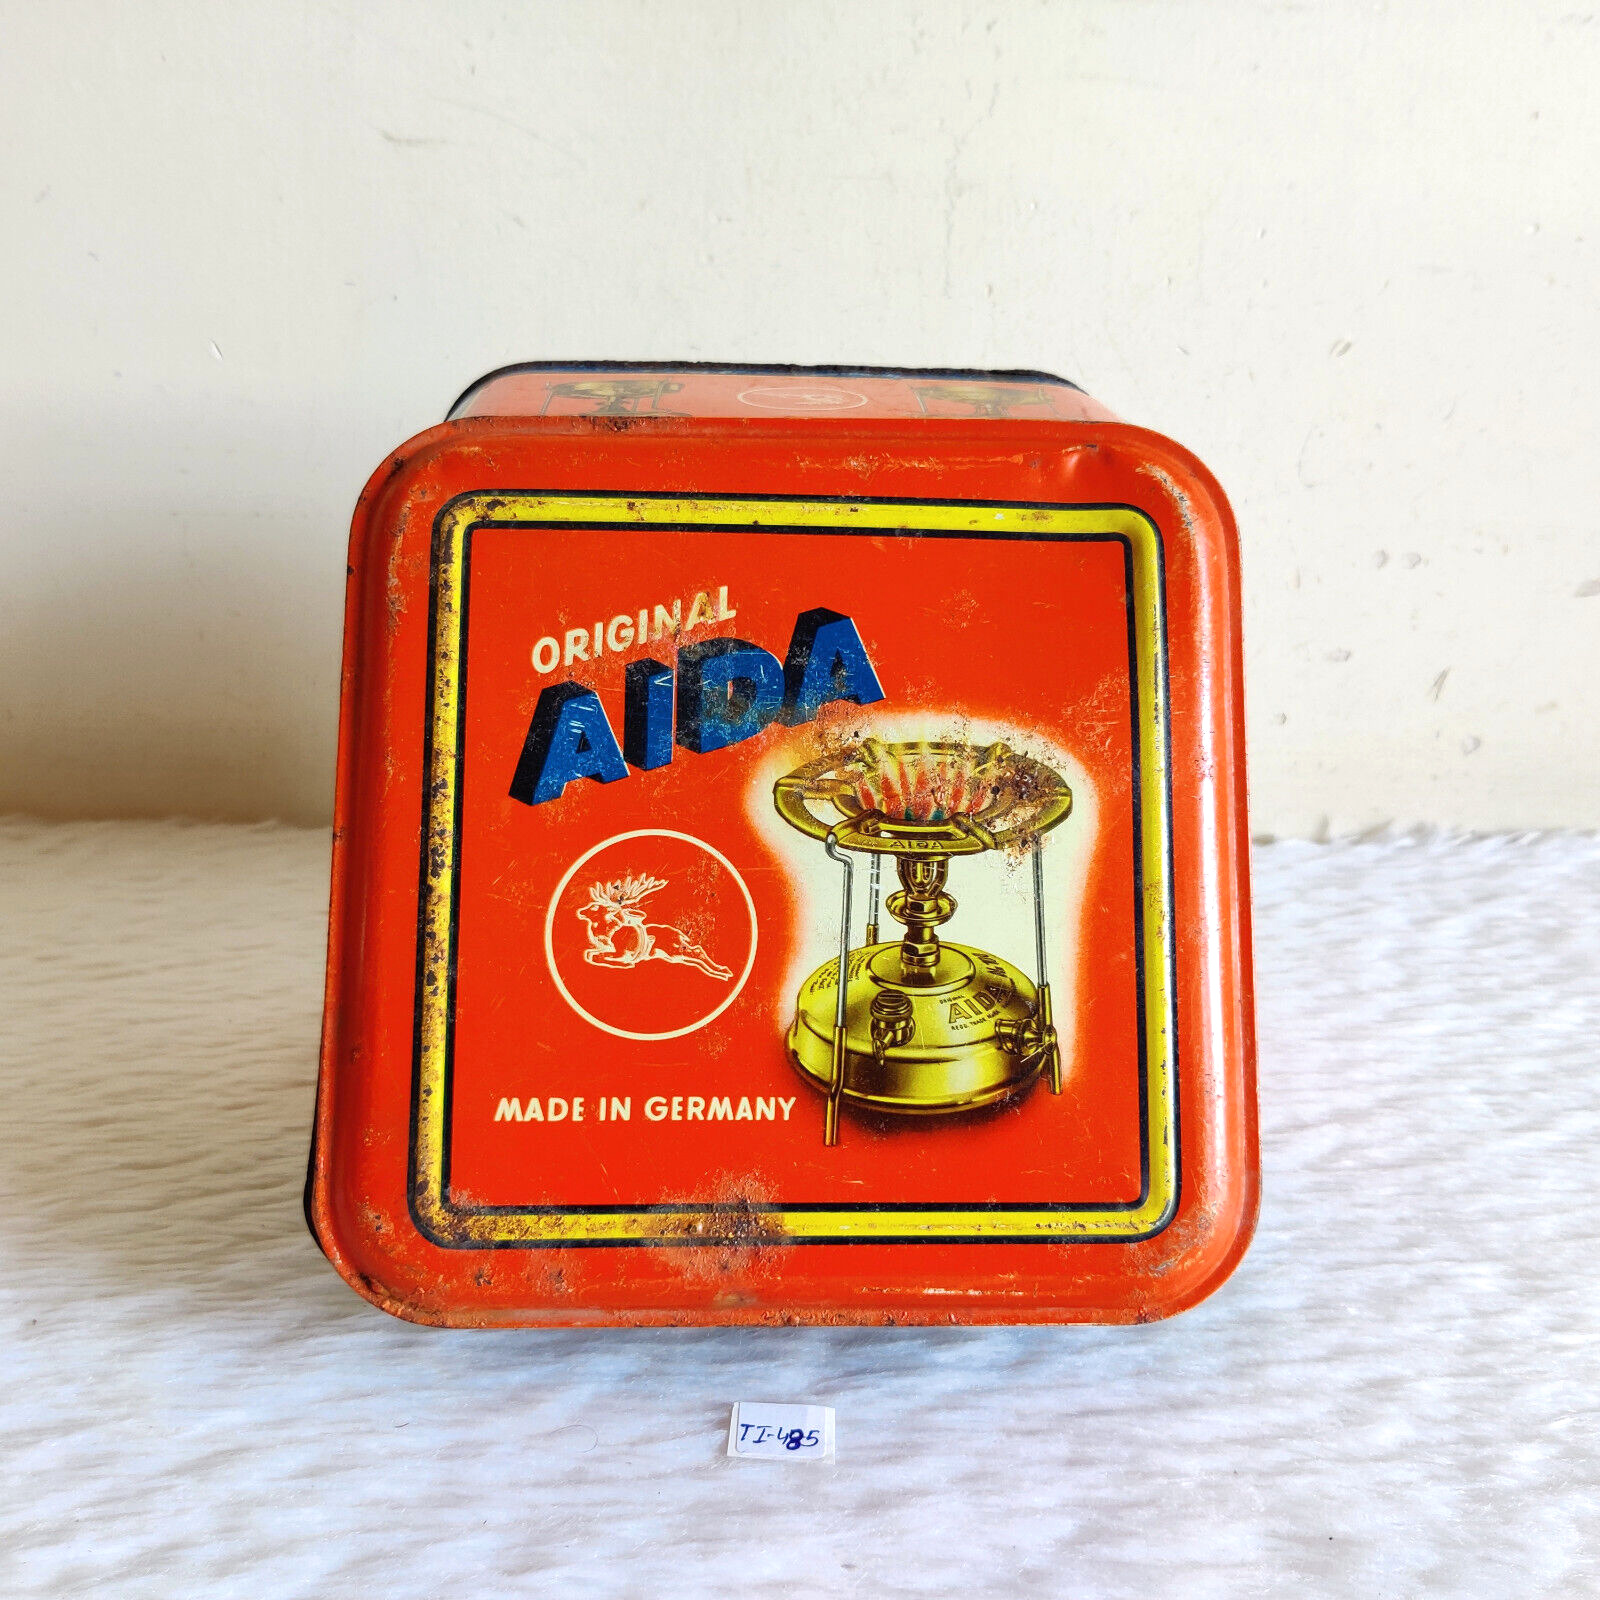 Vintage Original Aida Stove & Lamp Advertising Tin Box Germany Collectible TI485